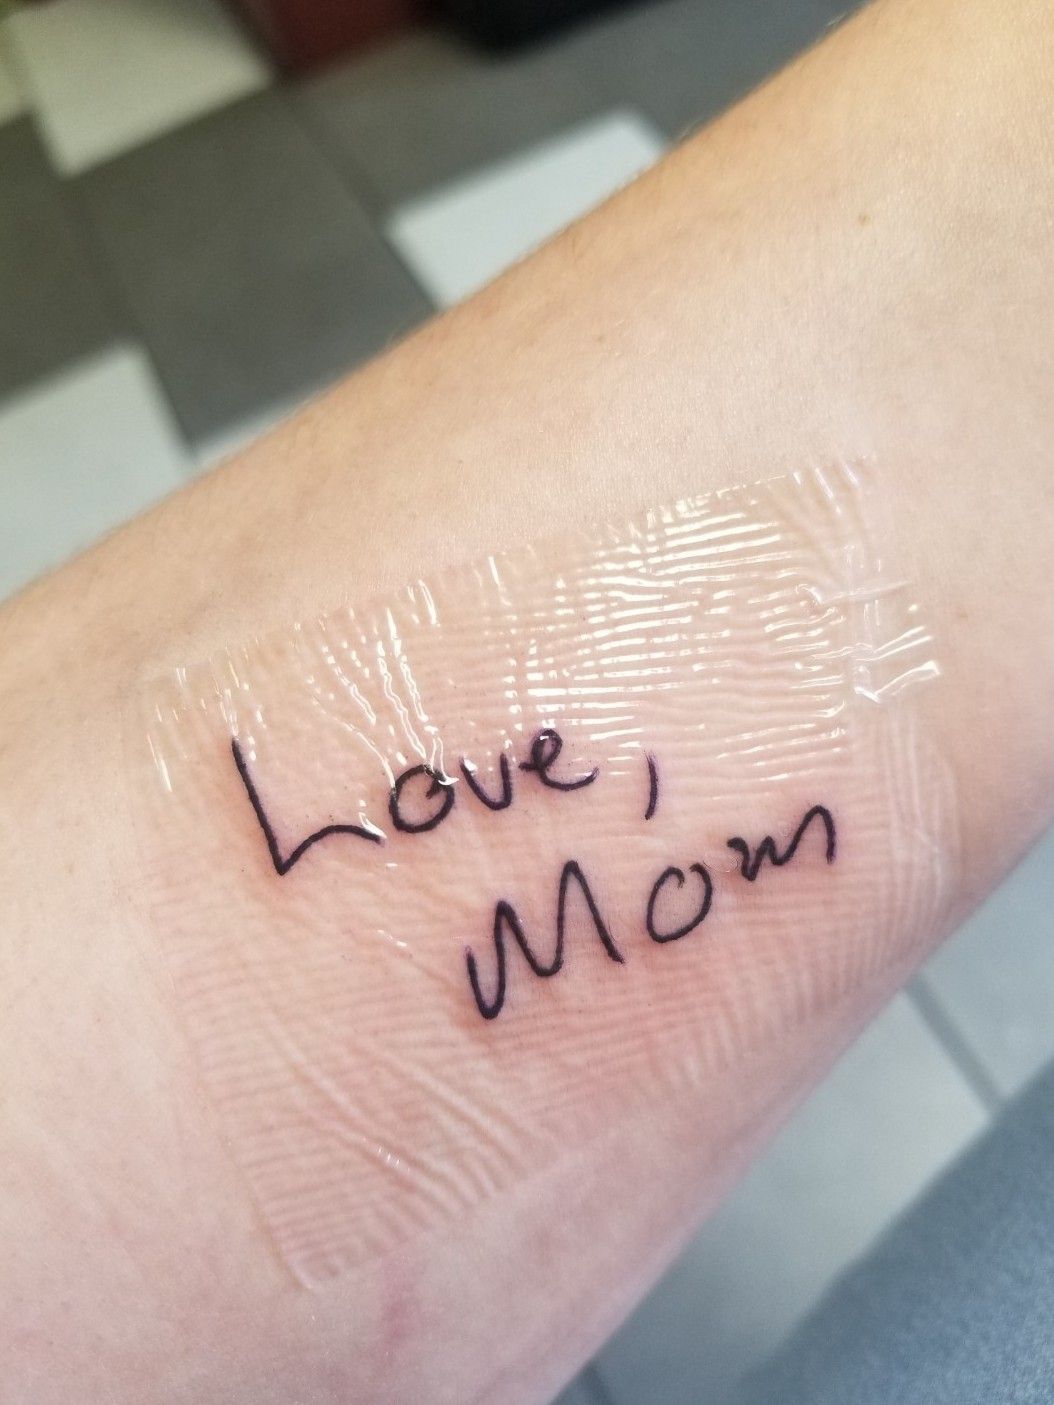 Moonlight Tattoo  Mother daughter handwriting tattoos By Diane Tattoo  tattooideas NJTattoo NewJerseyTattoo TattooArtist OceanCity  TattoosForWomen matchingtattoos  Facebook